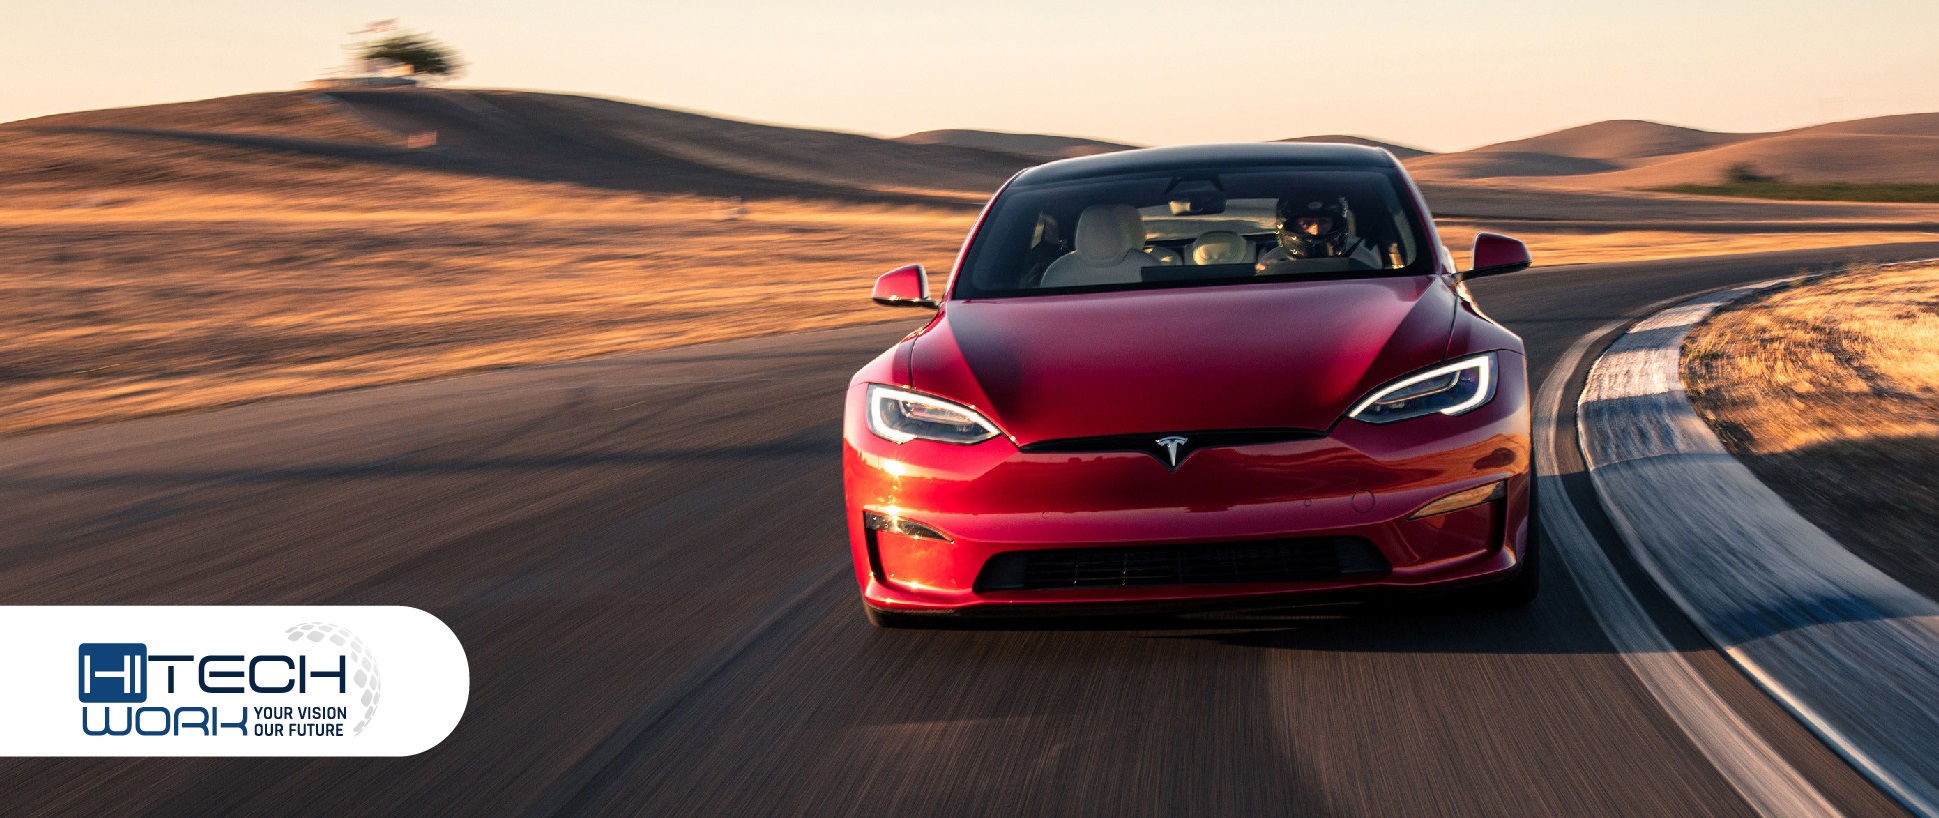 Tesla Wants $15000 for A Model S